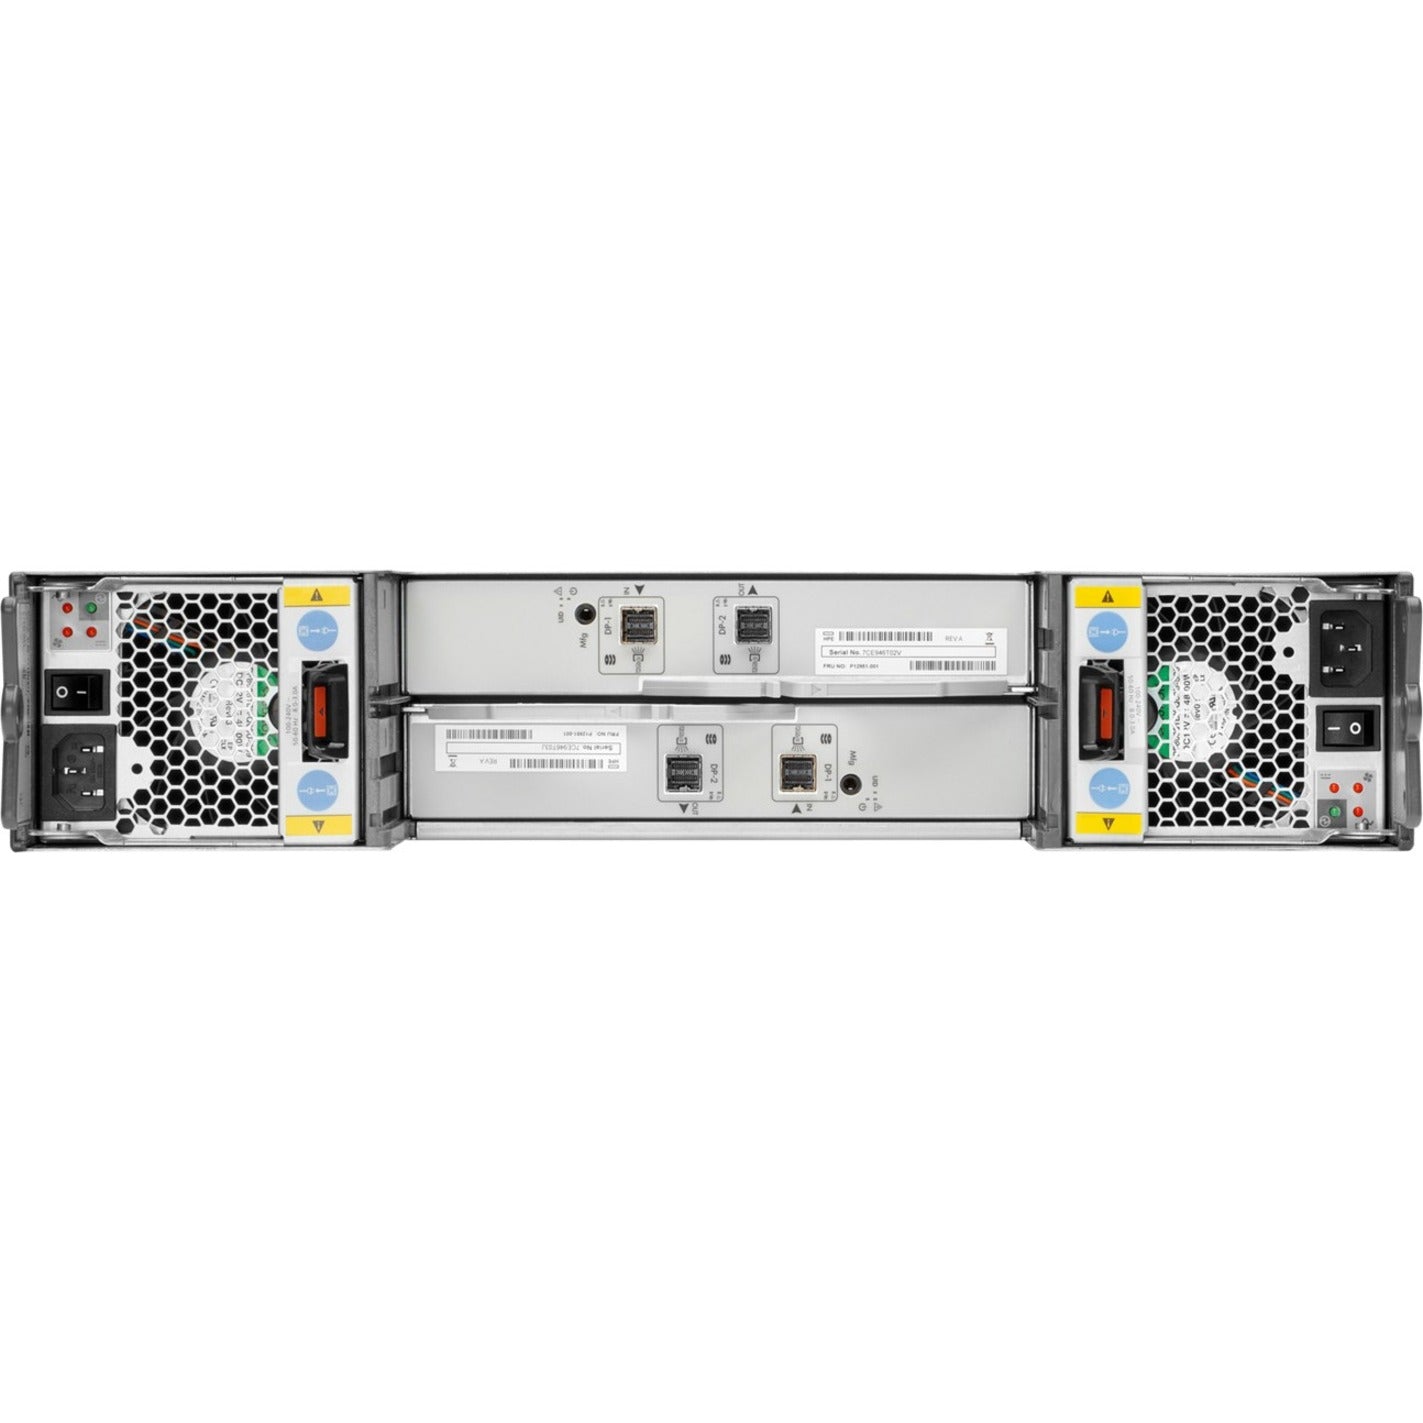 HPE R0Q39A MSA 2060 SAS 12G 2U 12-disk LFF Drive Enclosure, 12Gb/s SAS Interface